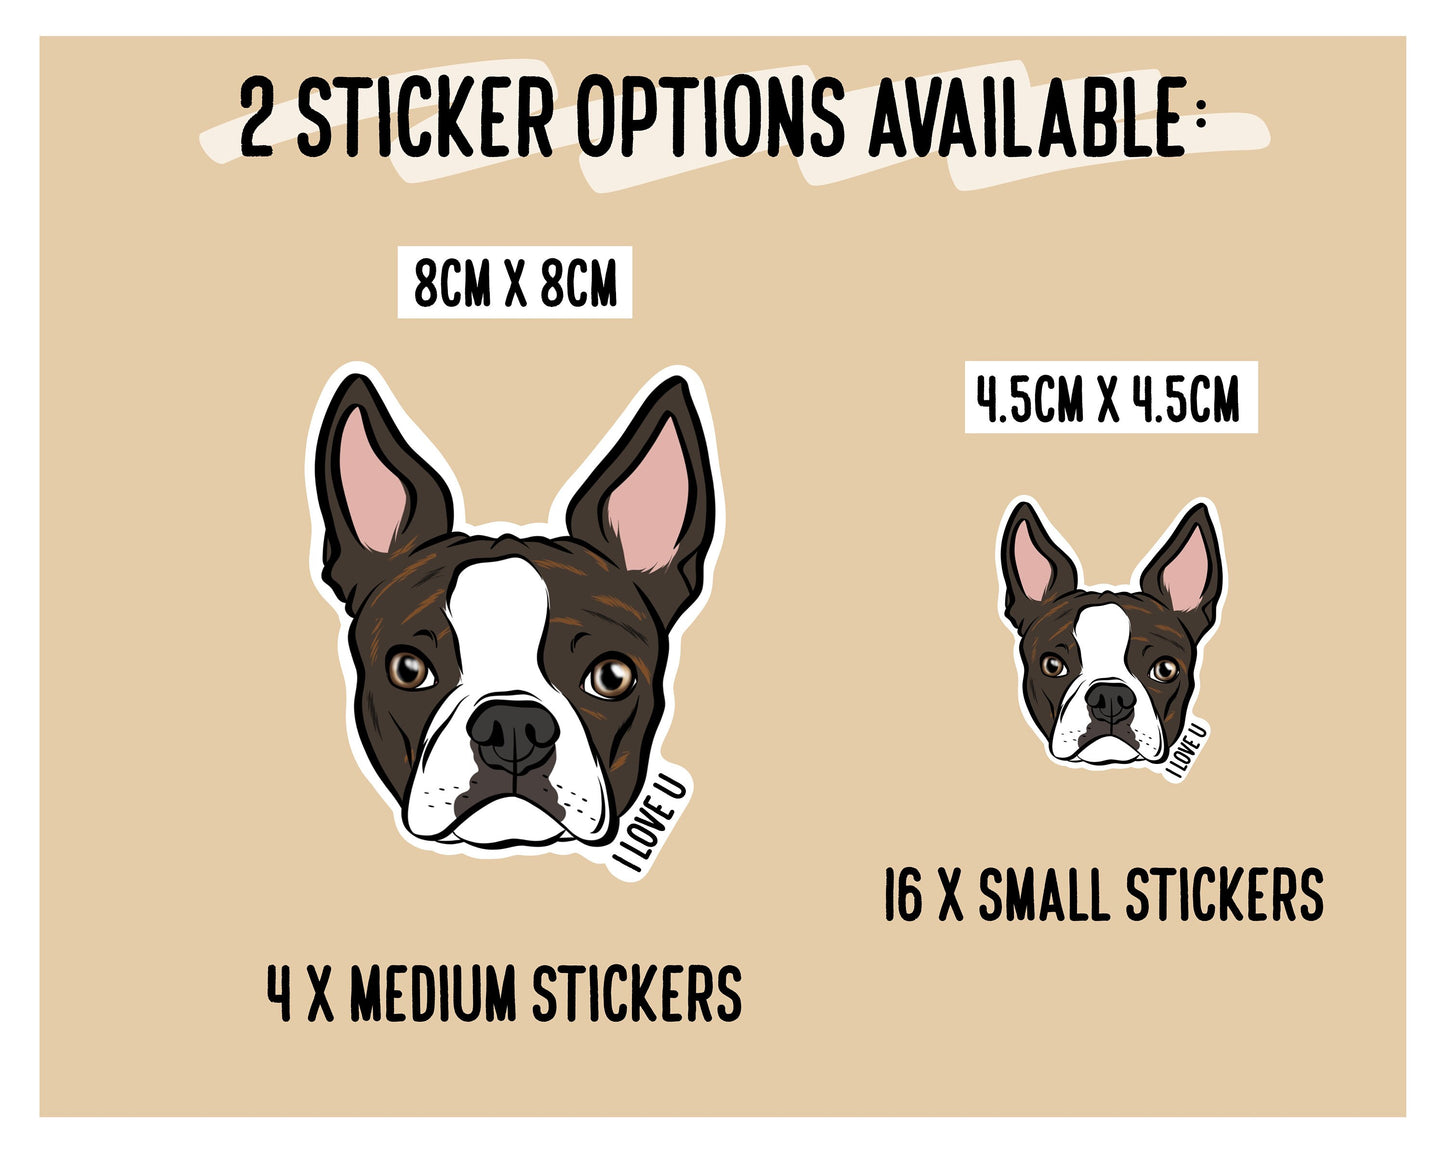 Boston Terrier Stickers